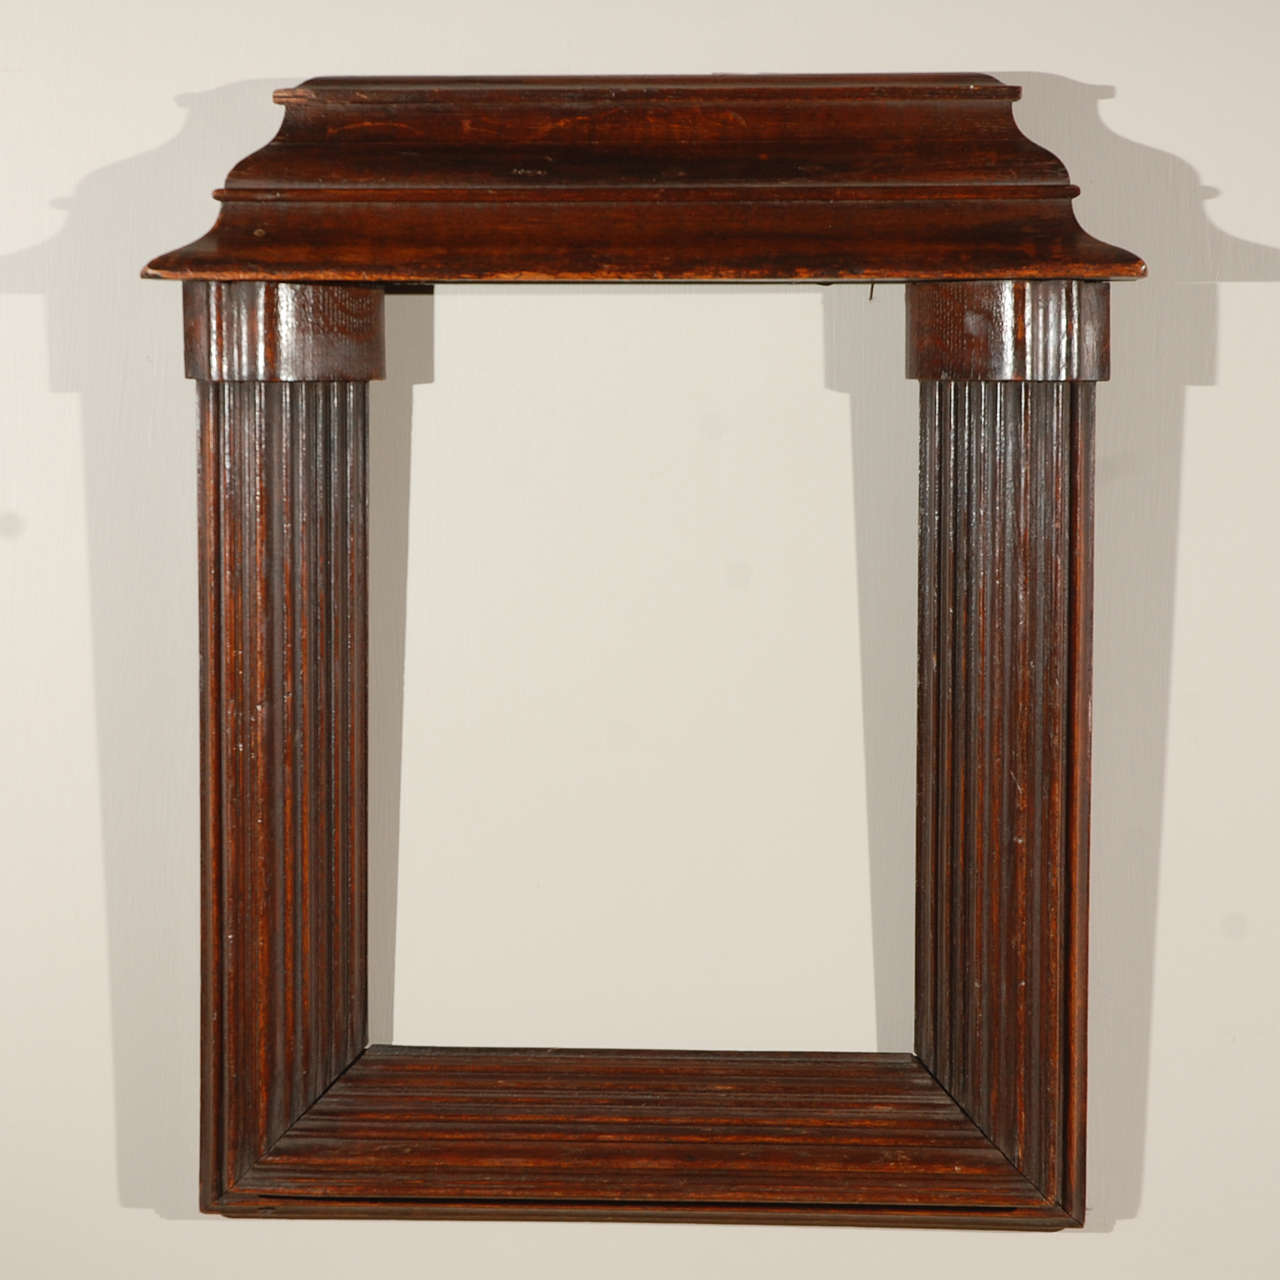 Cornice top rectangular reeded art or mirror frames in oak.